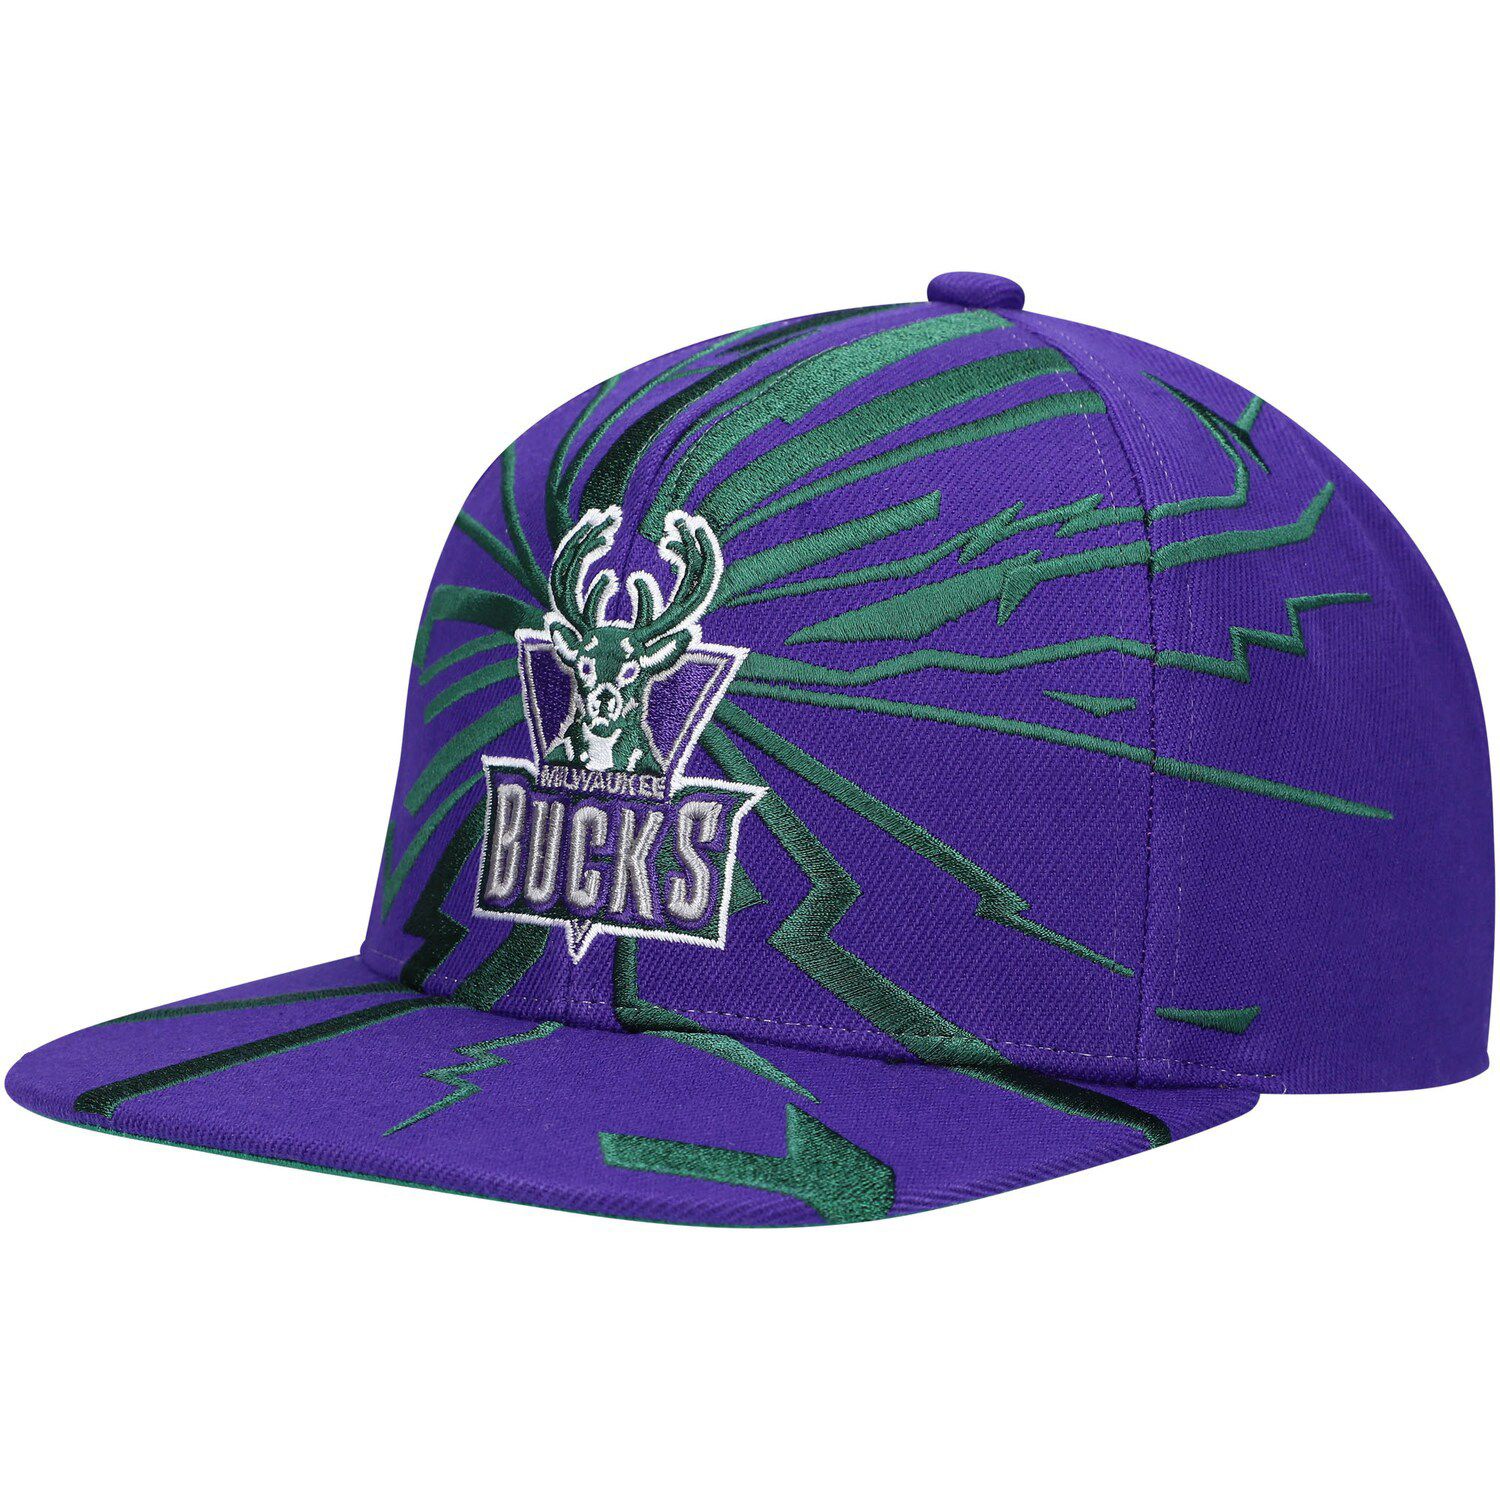 Image for Unbranded Men's Mitchell & Ness Purple Milwaukee Bucks Hardwood Classics Earthquake Snapback Hat at Kohl's.